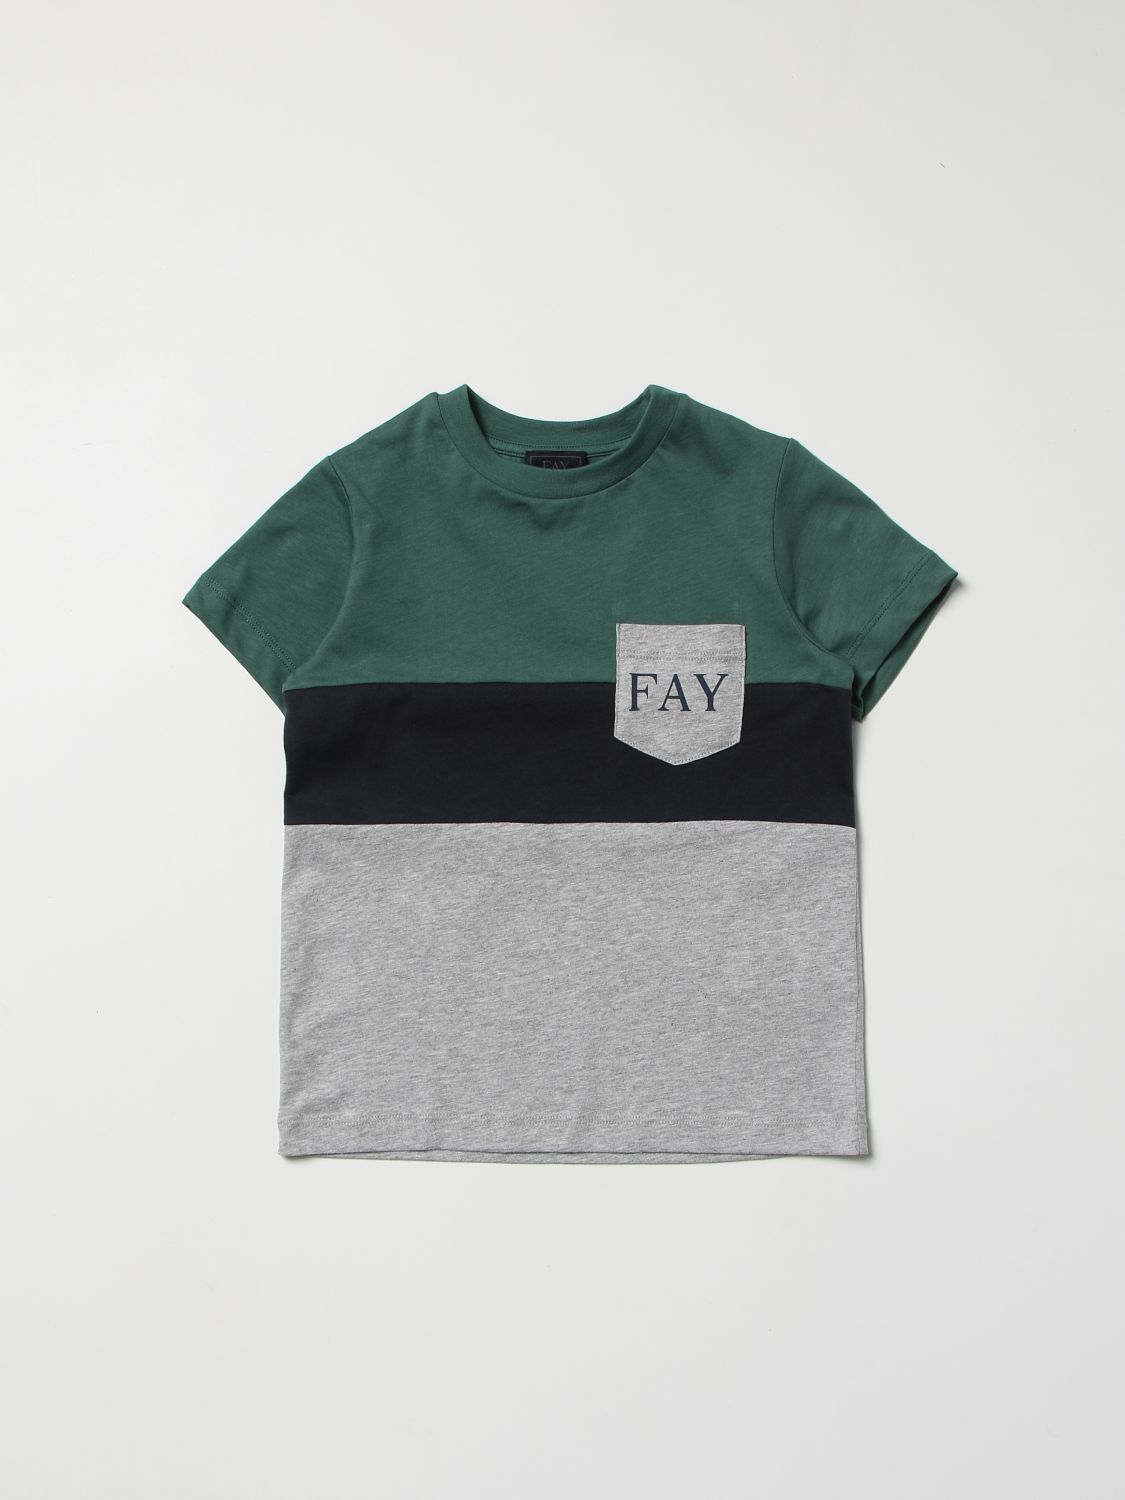 Camiseta Fay: Camiseta niños Fay fantasía 1